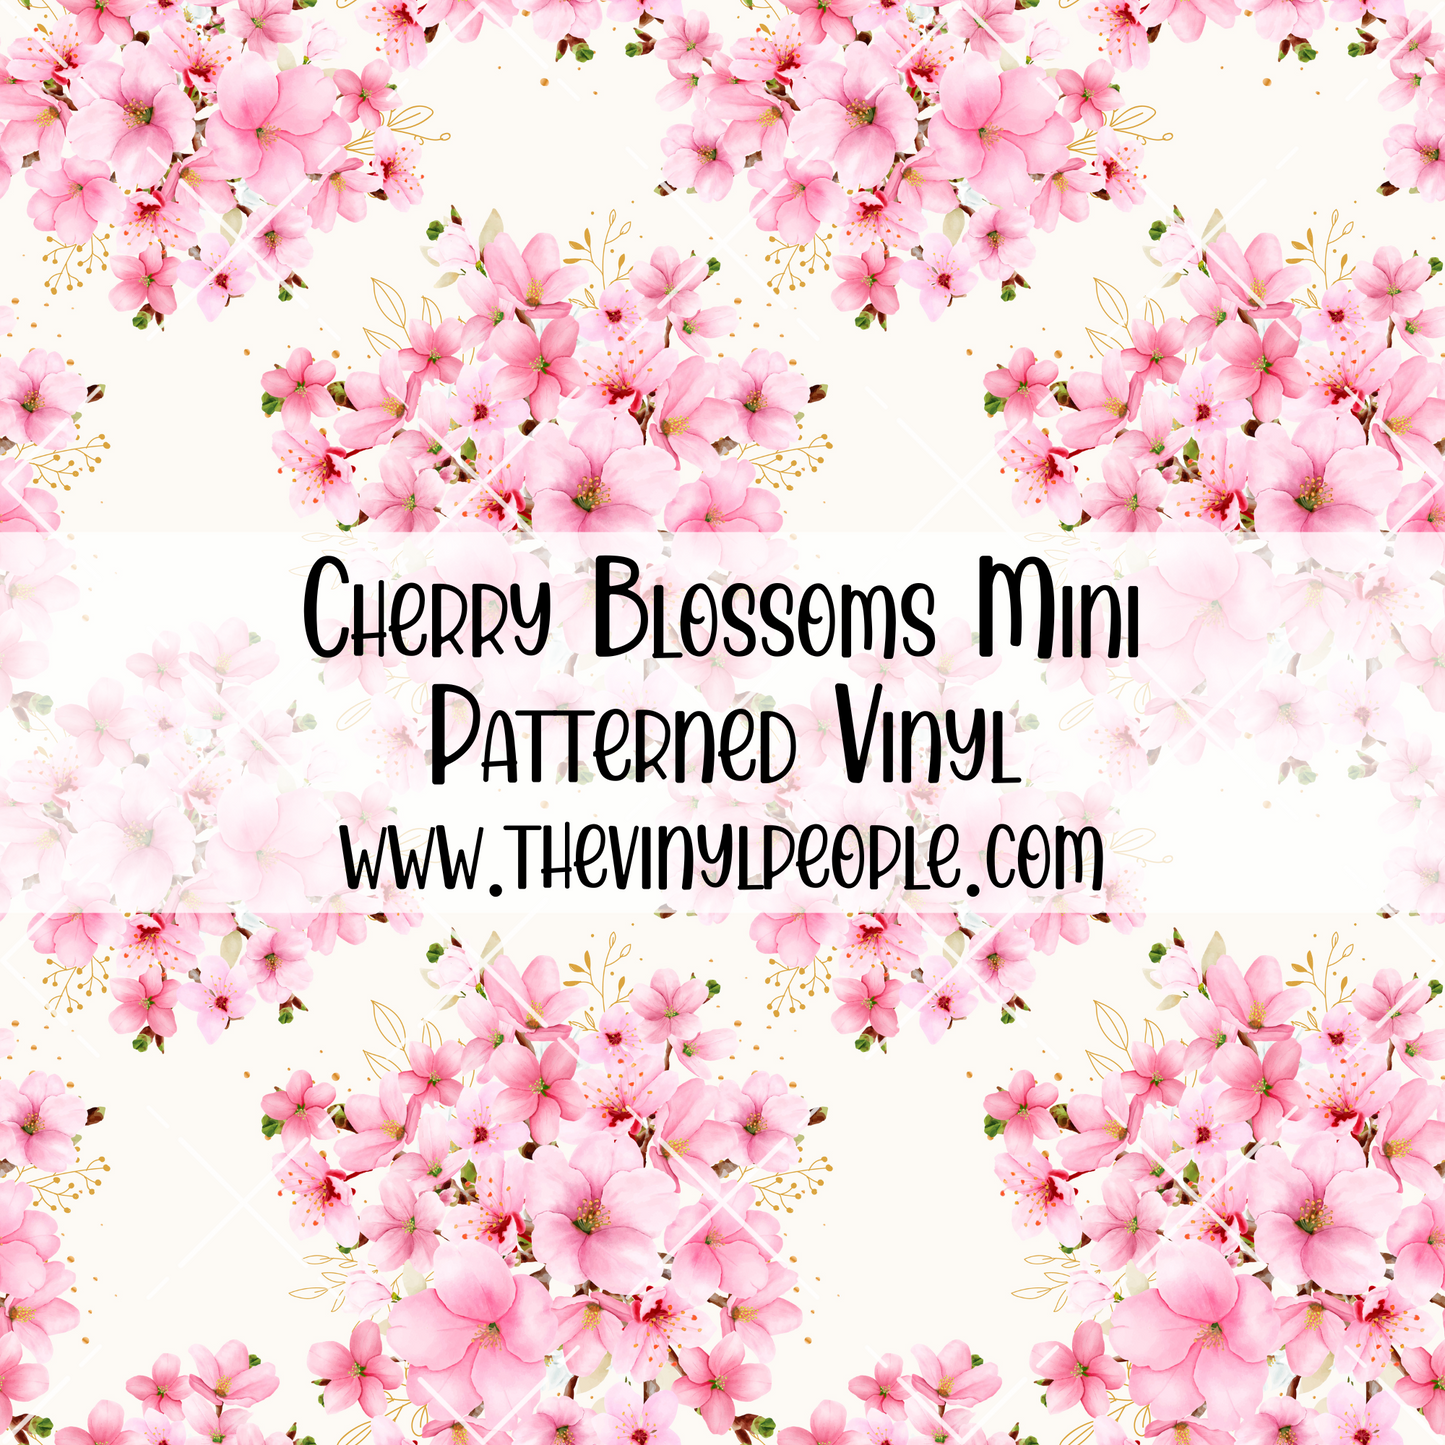 Cherry Blossoms Patterned Vinyl